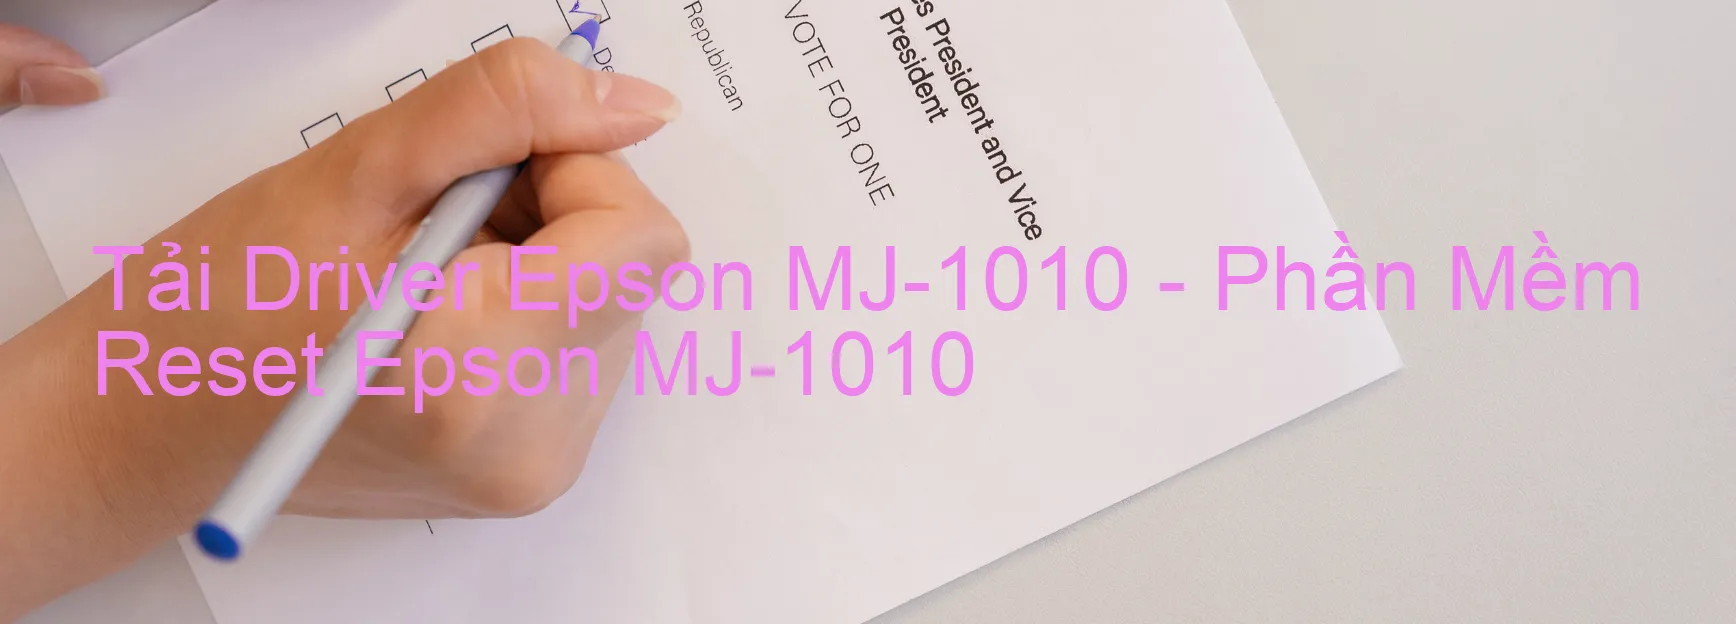 Driver Epson MJ-1010, Phần Mềm Reset Epson MJ-1010